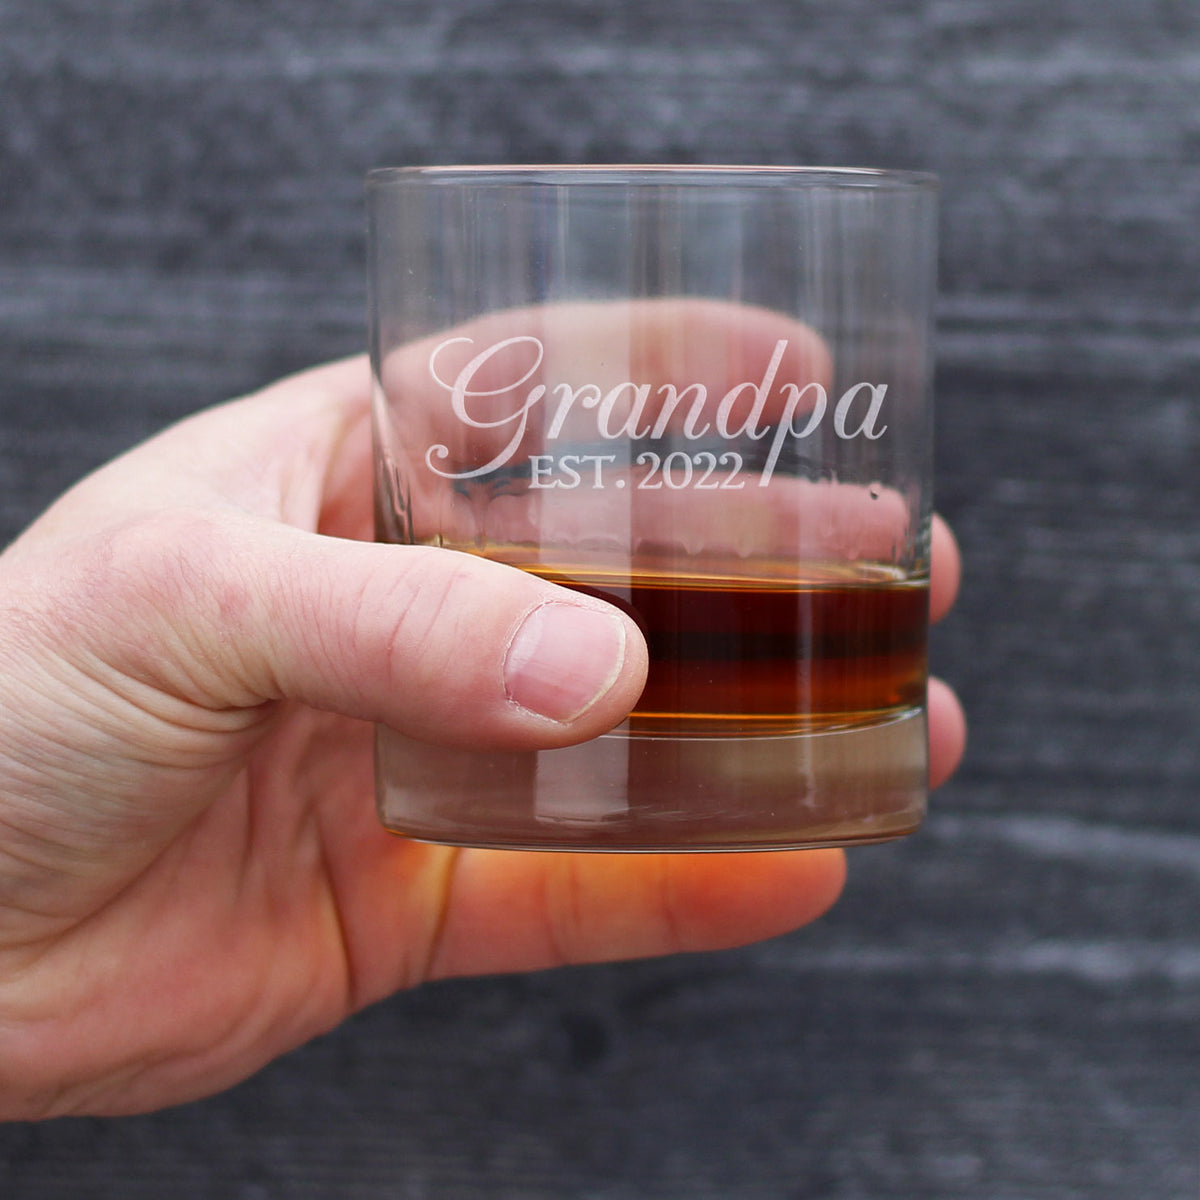 Grandpa Est 2022 - New Grandfather Whiskey Rocks Glass Gift for First Time Grandparents - Decorative 10.25 Oz Glasses